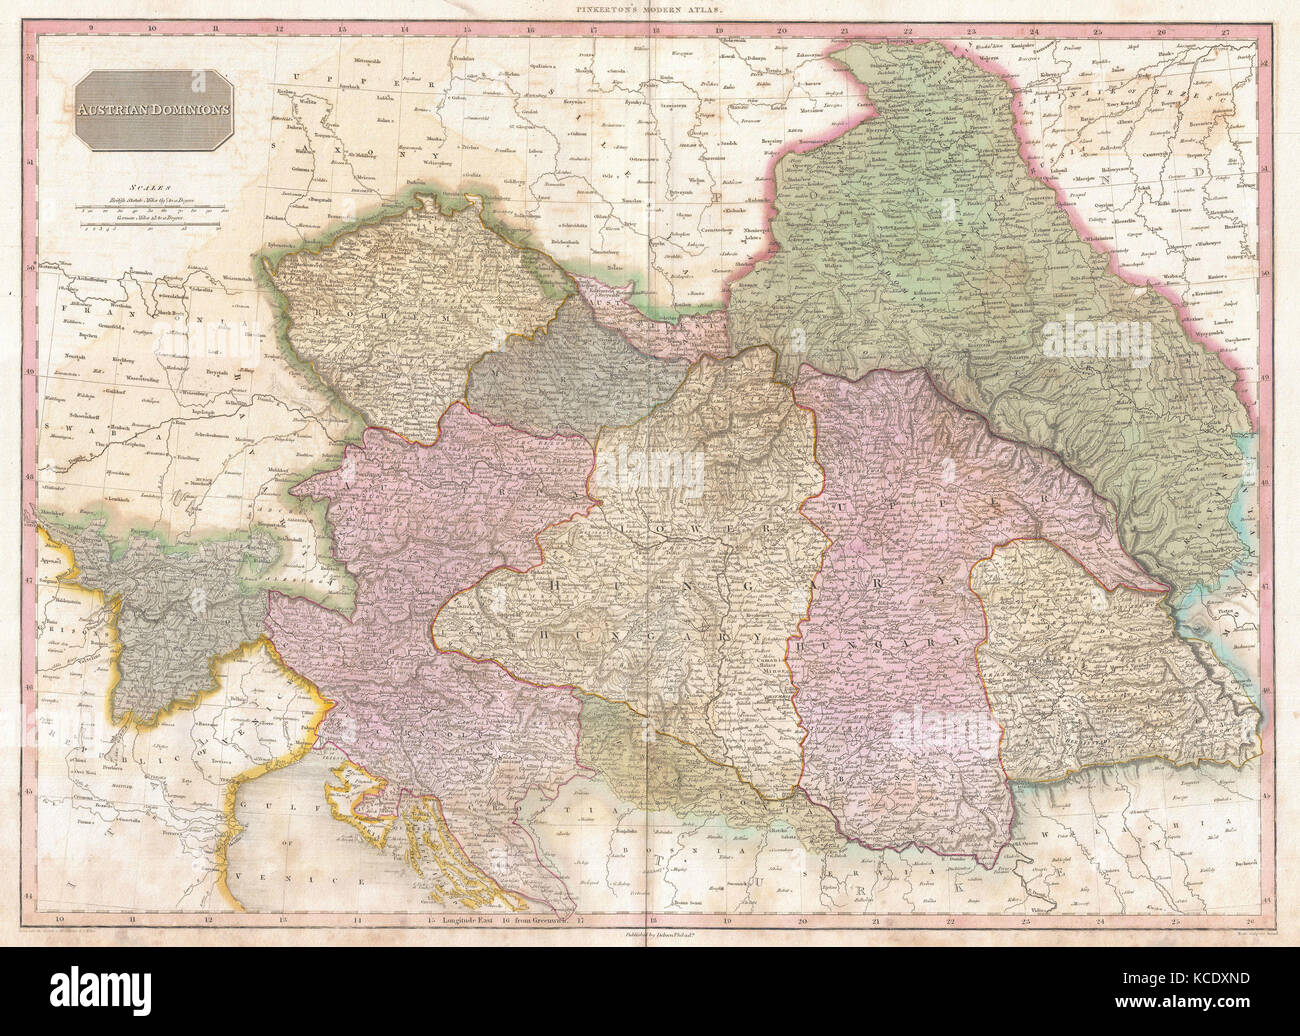 1818, Pinkerton mappa dell'Impero Austriaco, John Pinkerton, 1758 - 1826, antiquario scozzese, cartografo, REGNO UNITO Foto Stock